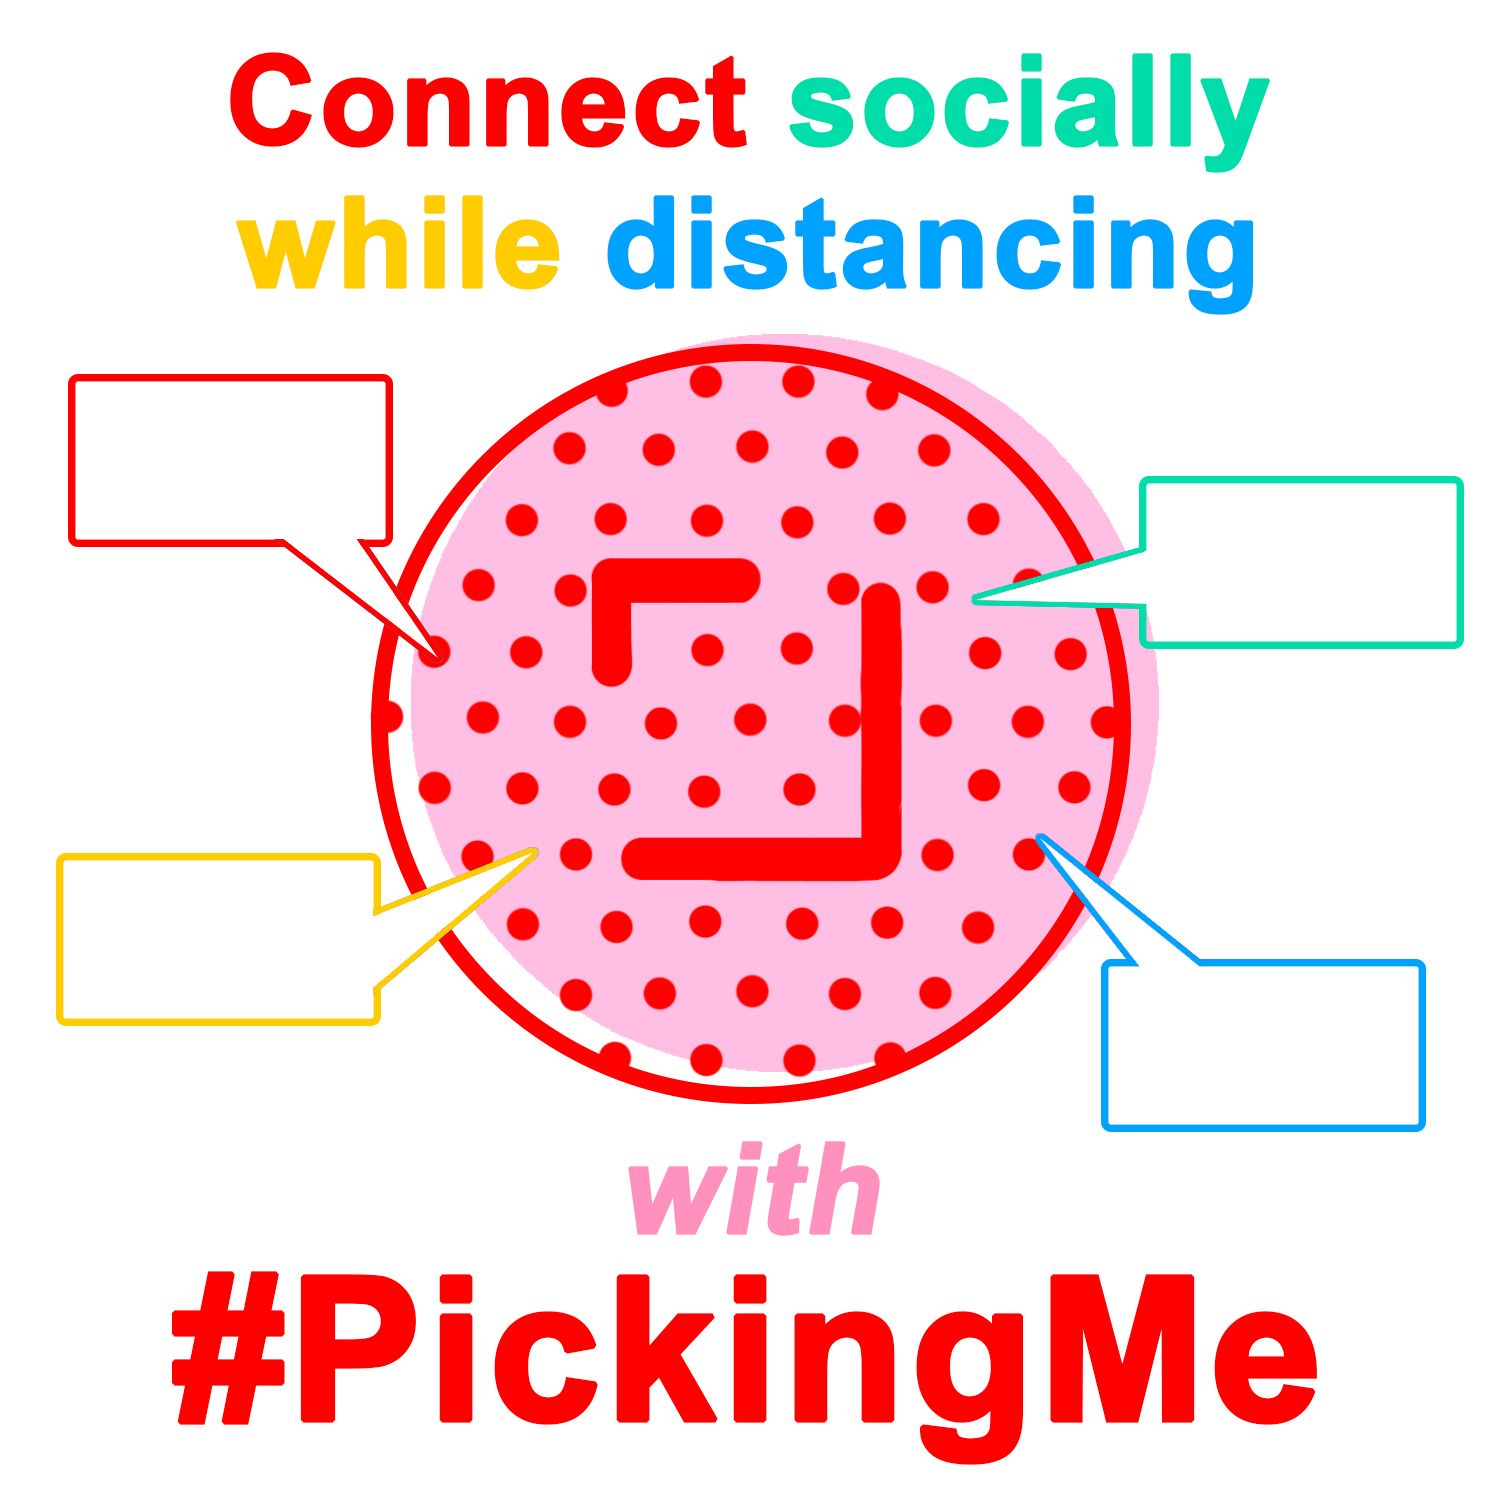 #PickingMe's Social Media Hashtag